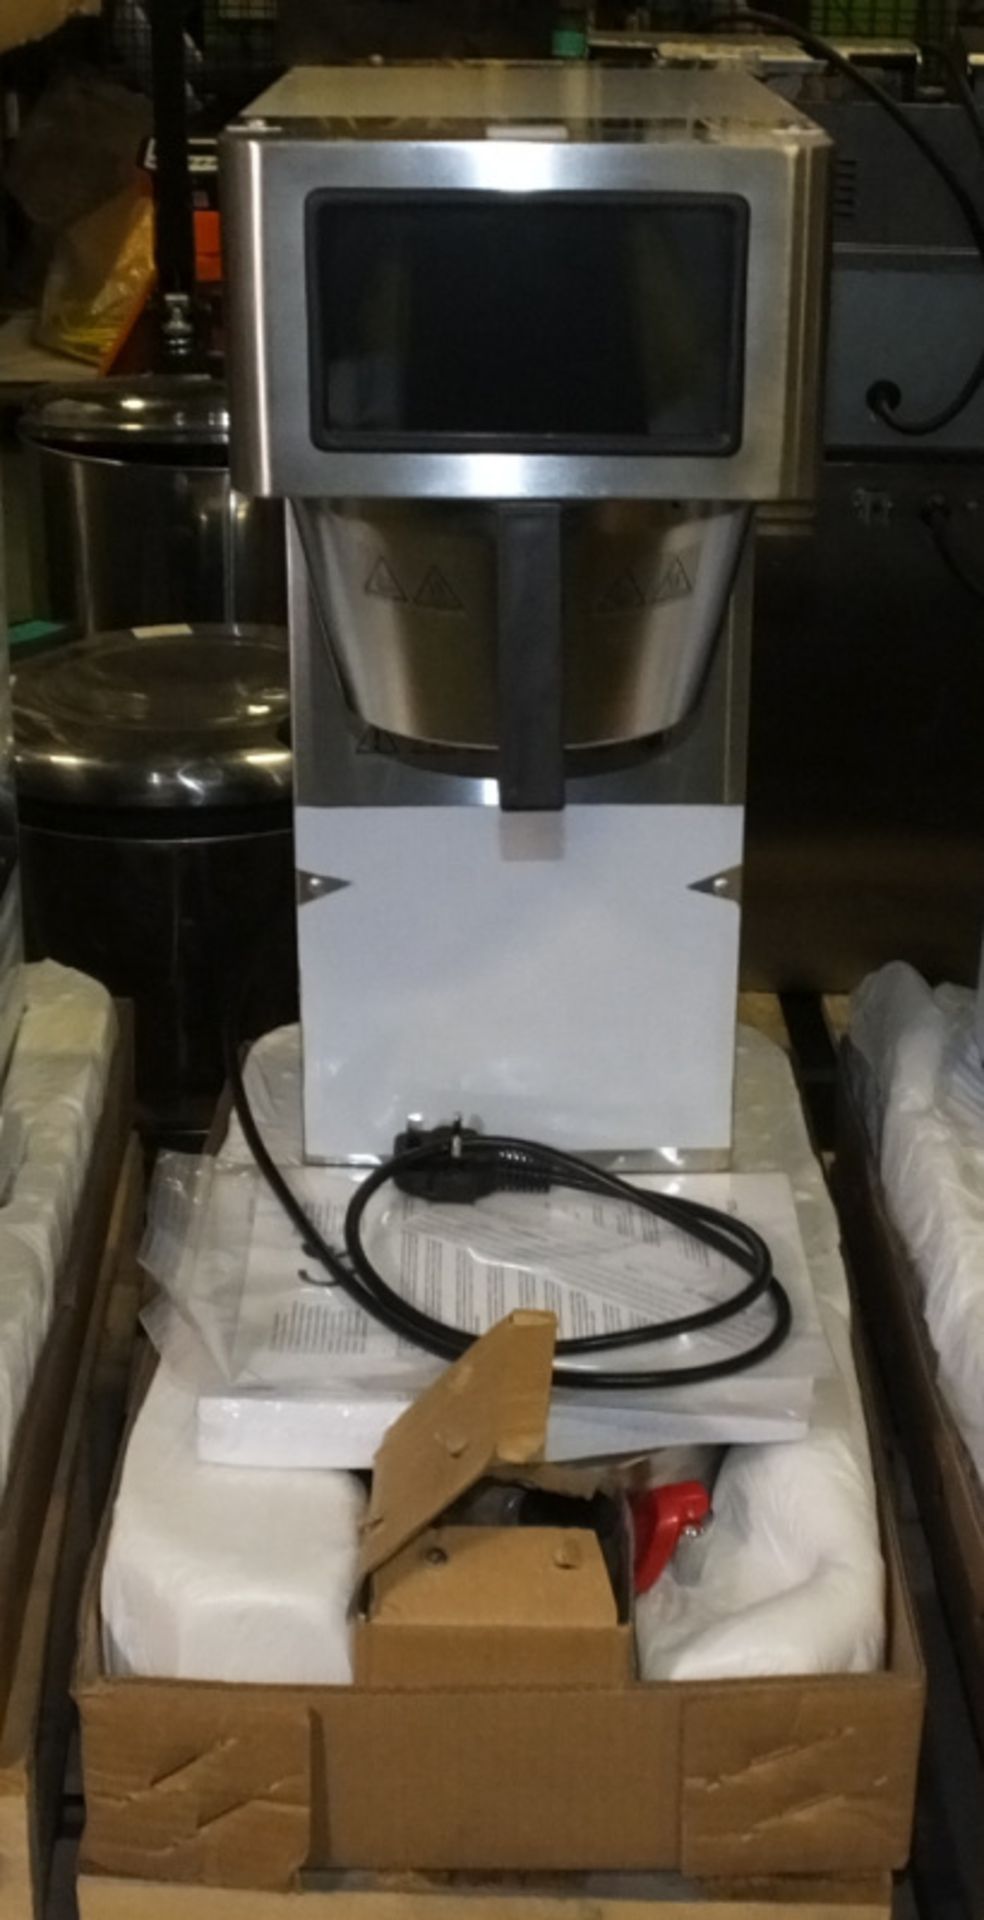 Electrolux PrecisionBrew Coffee Brewer Single